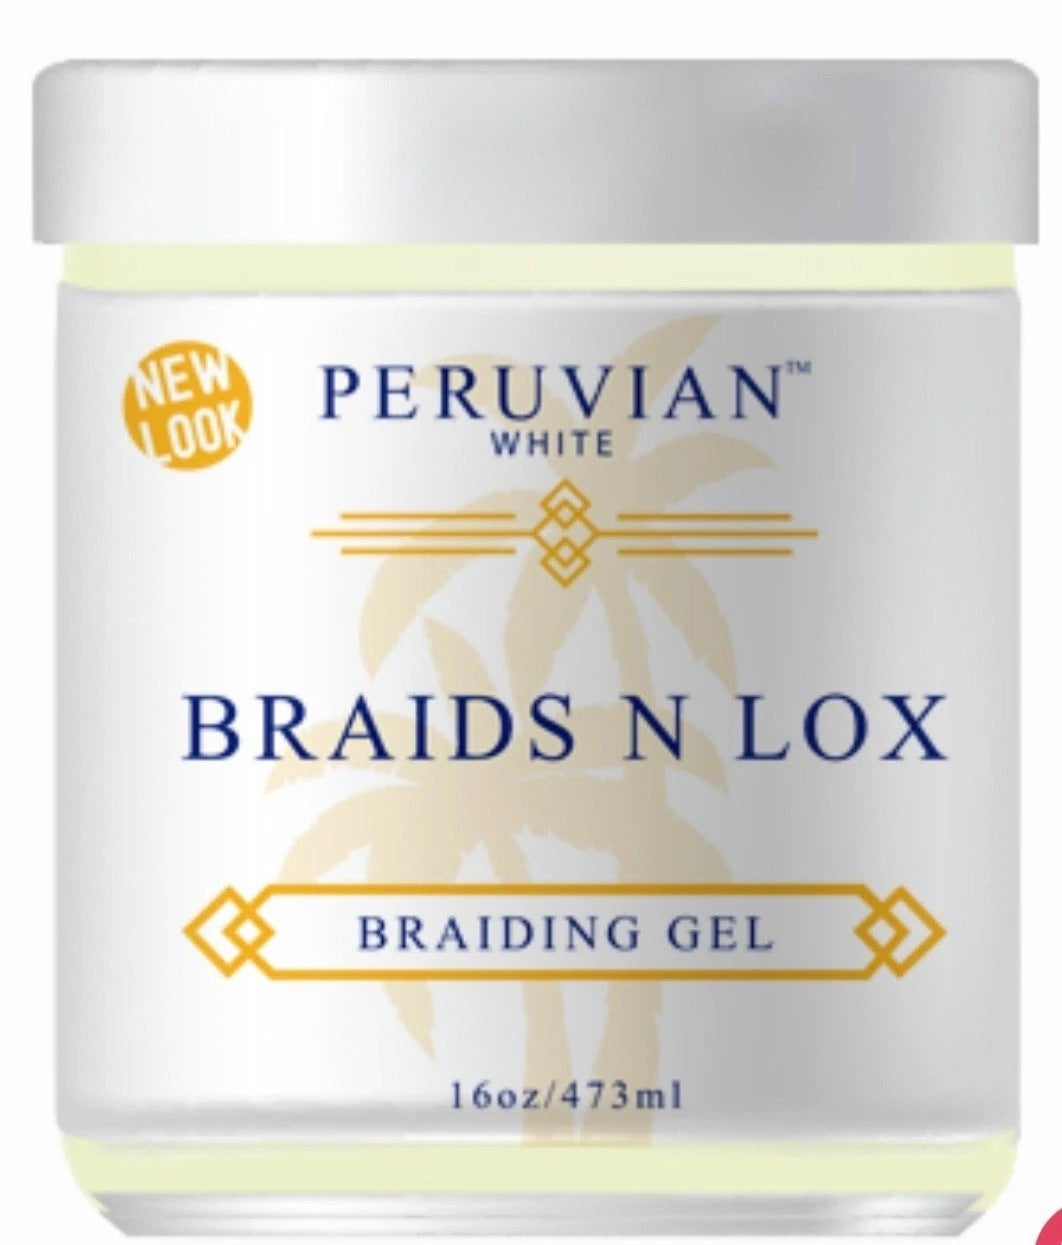 Peruvian White Braids N Lox 16oz